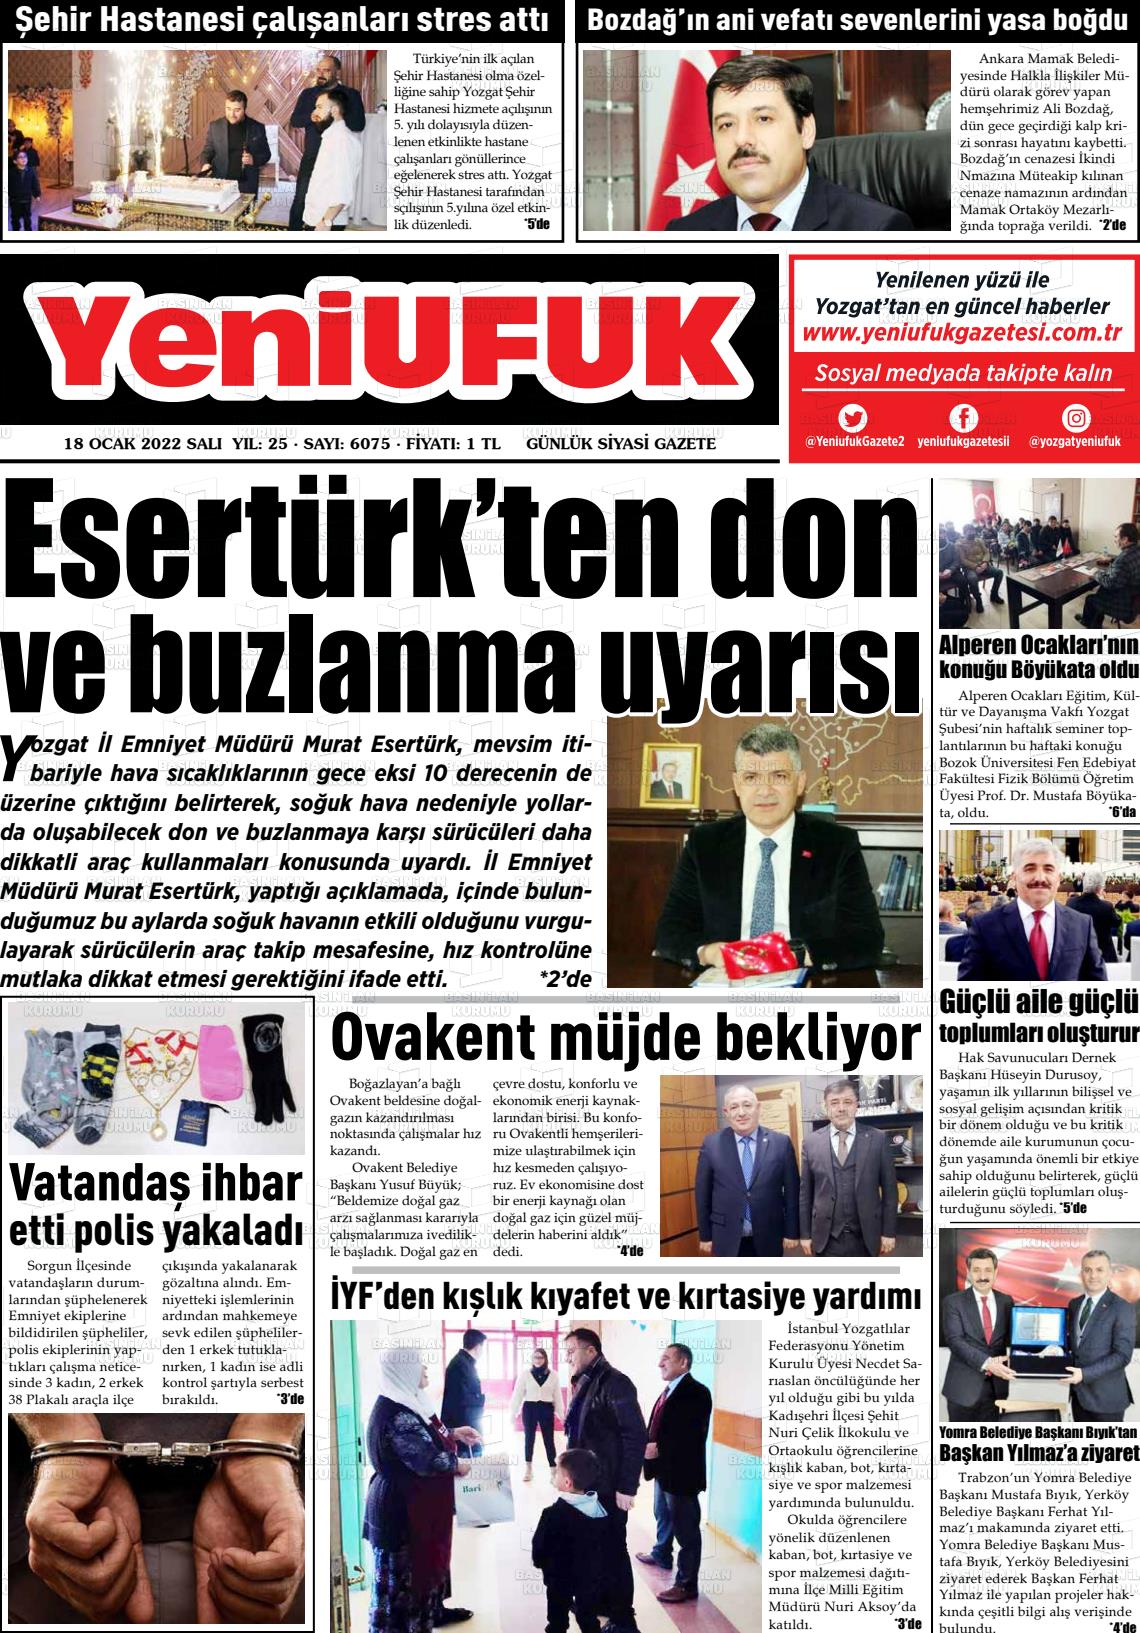 18 Ocak 2022 Yozgat Yeni Ufuk Gazete Manşeti